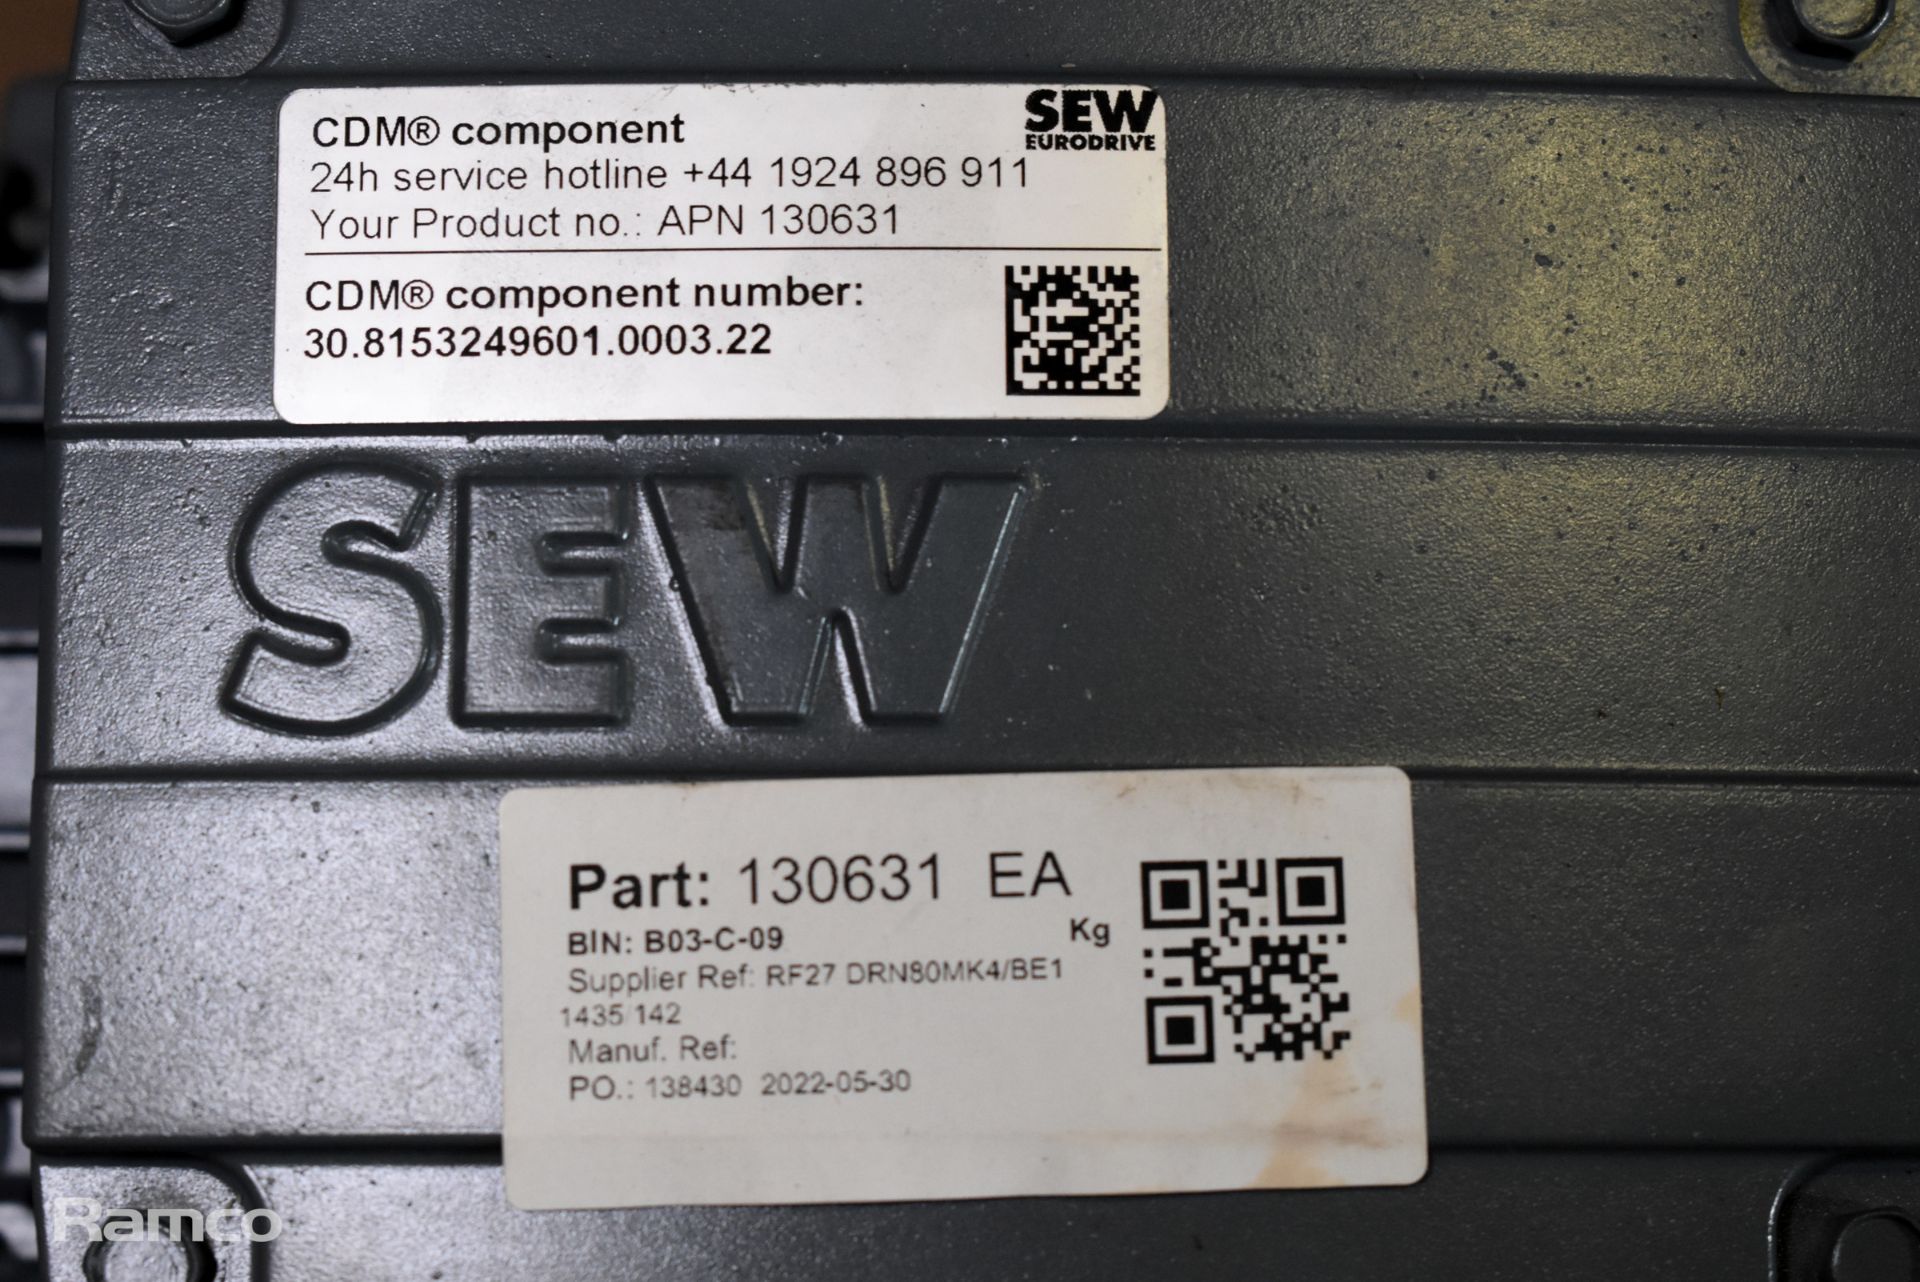 3x SEW-Eurodrive - RF27 DRN80LMK4BE1 electric gear motors - 1435/142rpm, 0.55kW, 230/400V, 2.25/1.29 - Image 4 of 5